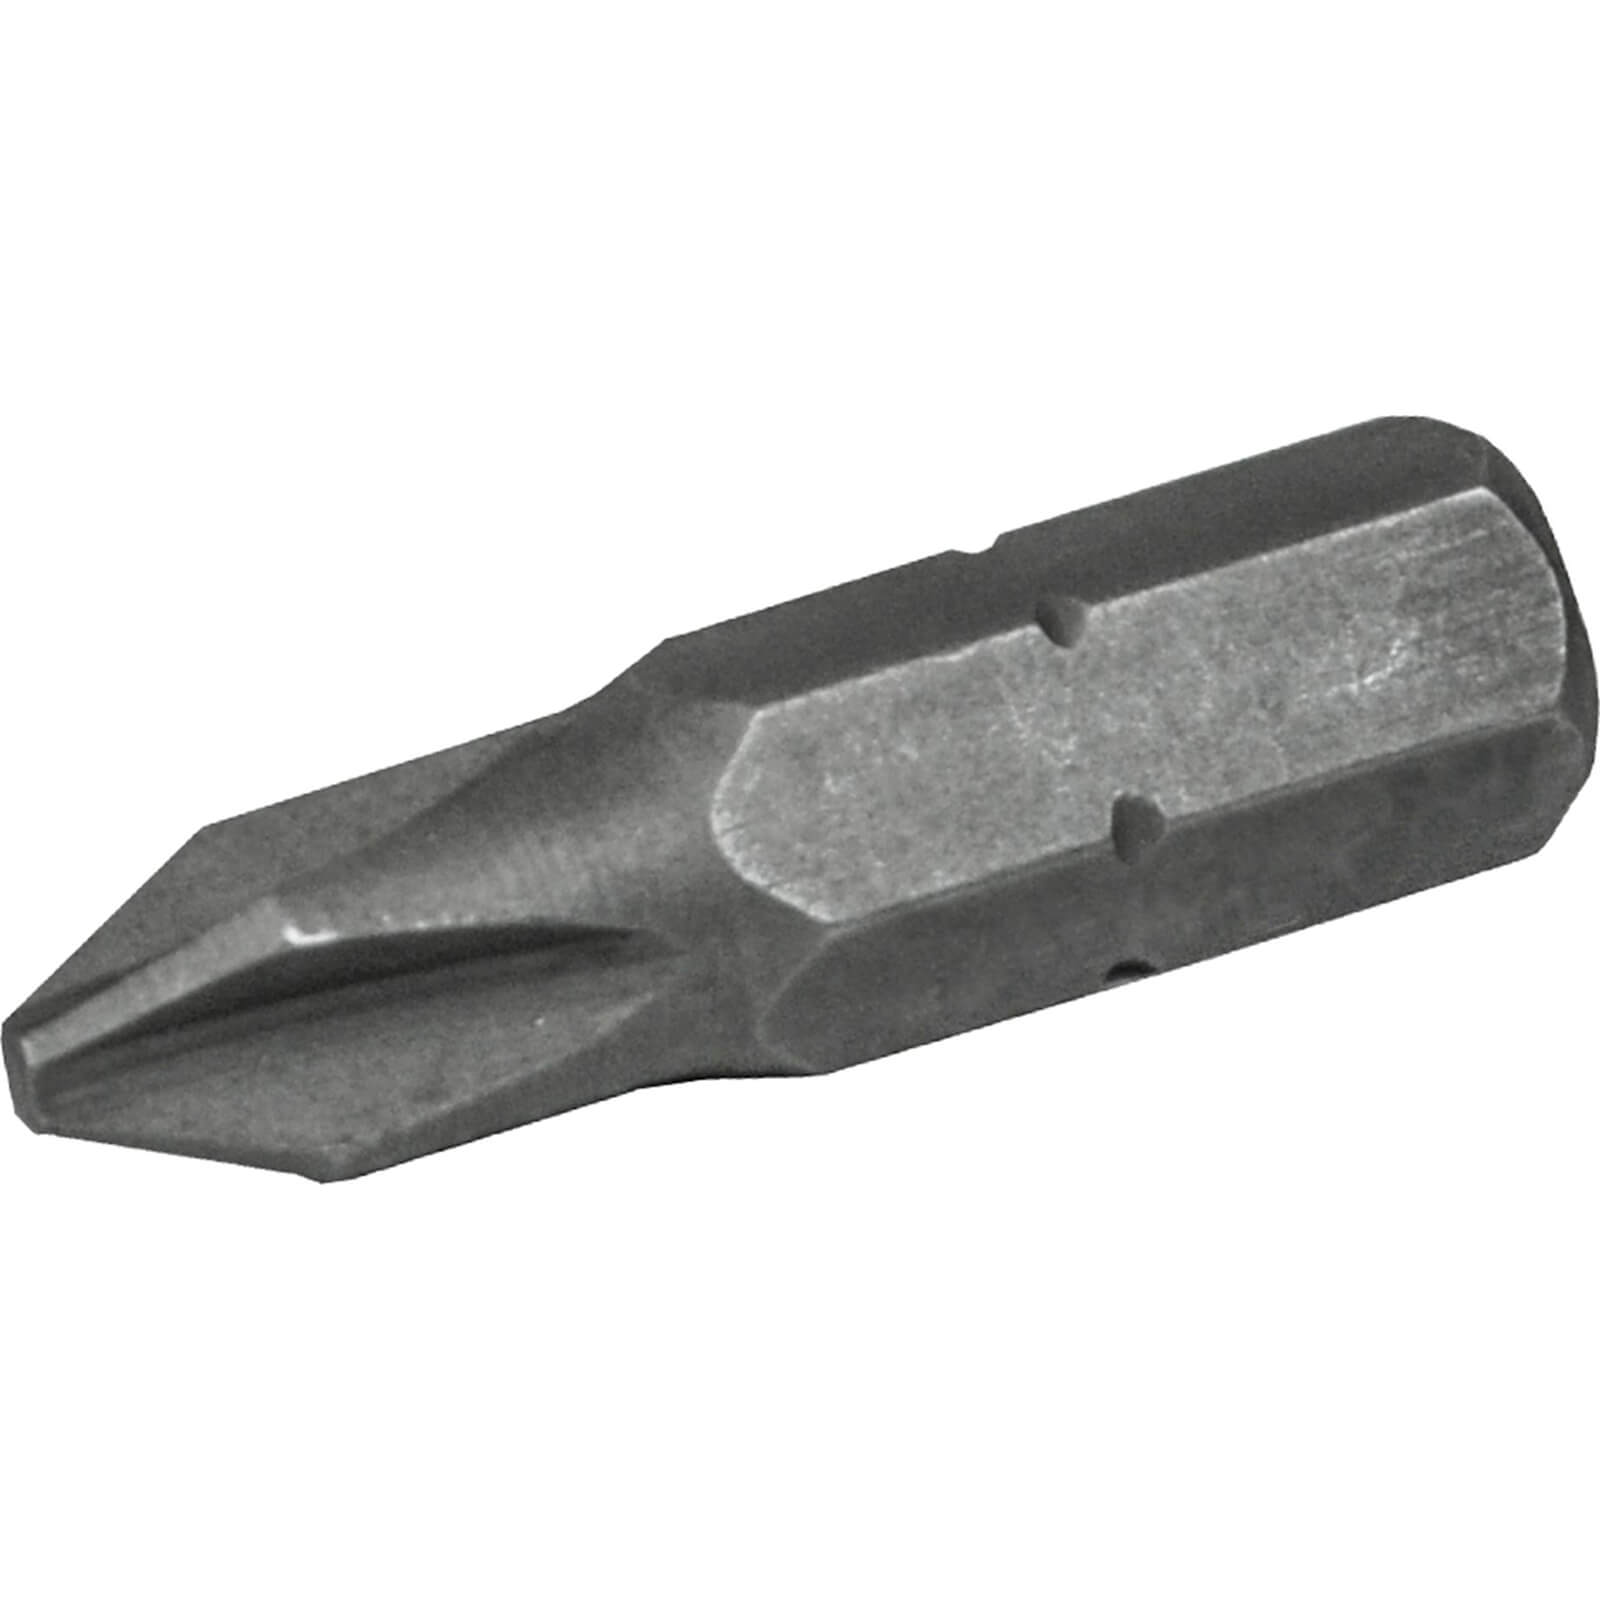 Image of Faithfull Phillips S2 Grade Steel Screwdriver Bits PH3 25mm Pack of 3